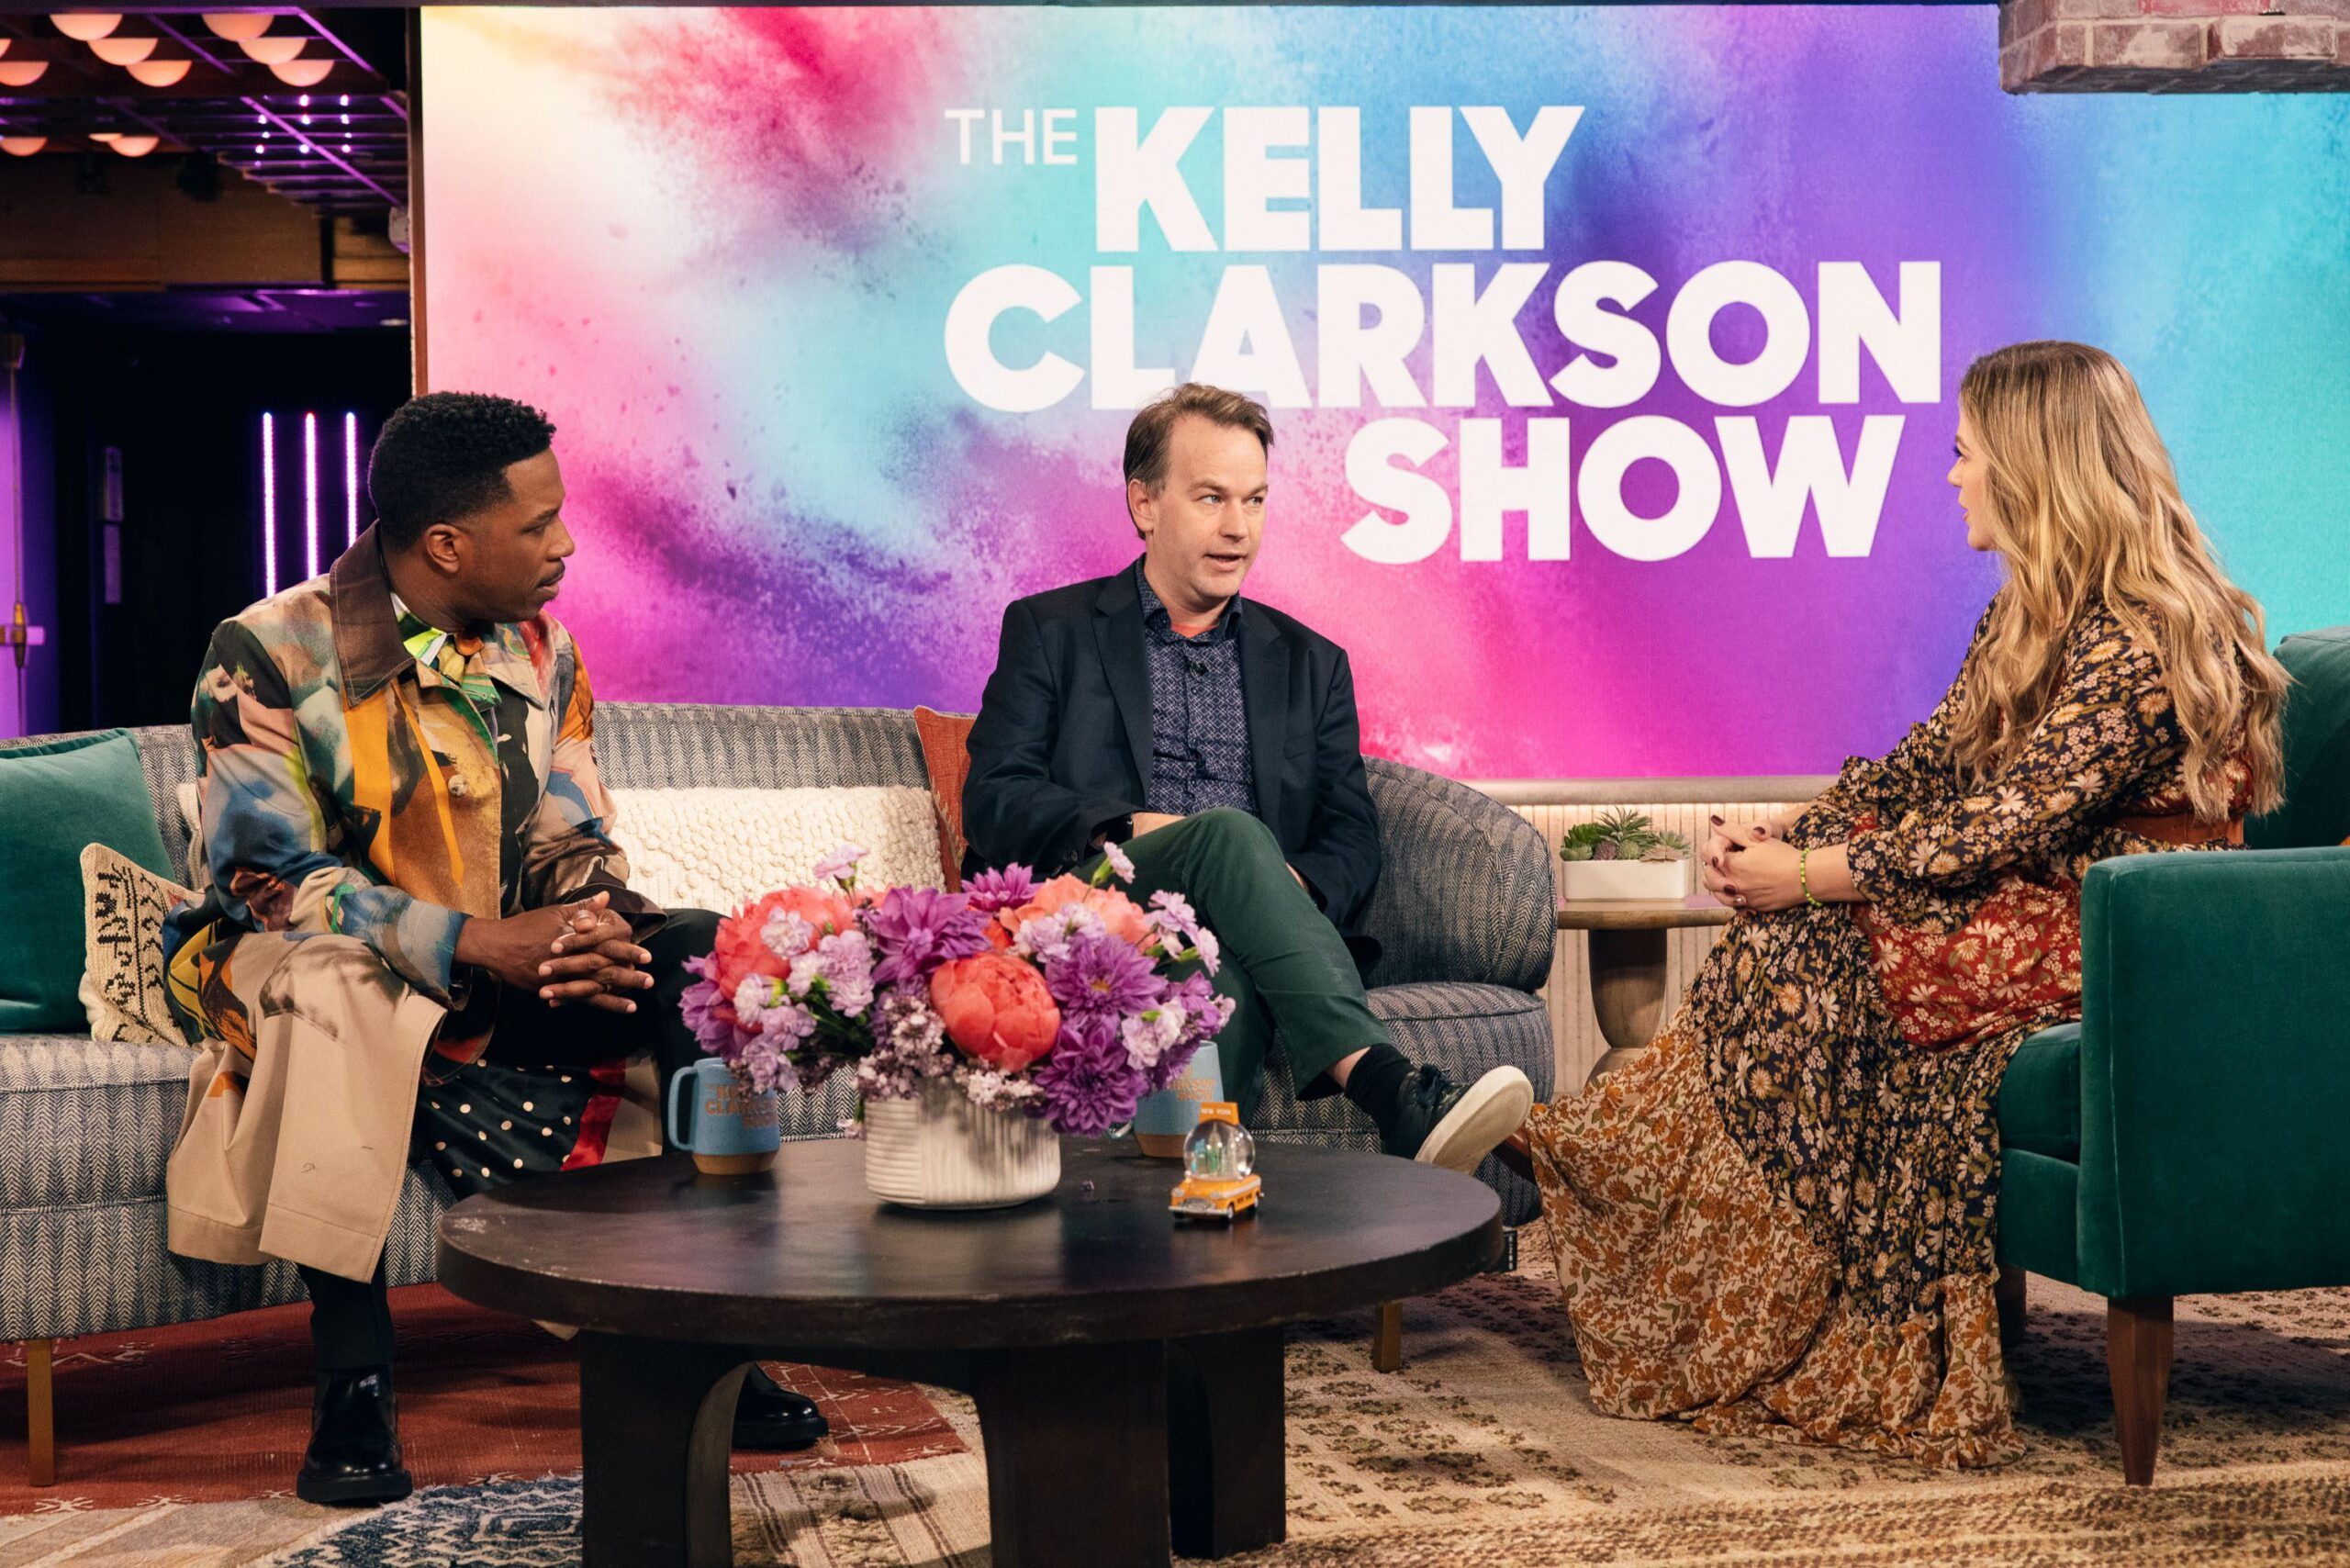 Leslie Odom Jr., Mike Birbiglia, Kelly Clarkson, The Kelly Clarkson Show, Kelly Clarkson Show, #KellyClarkson, #KellyClarksonShow